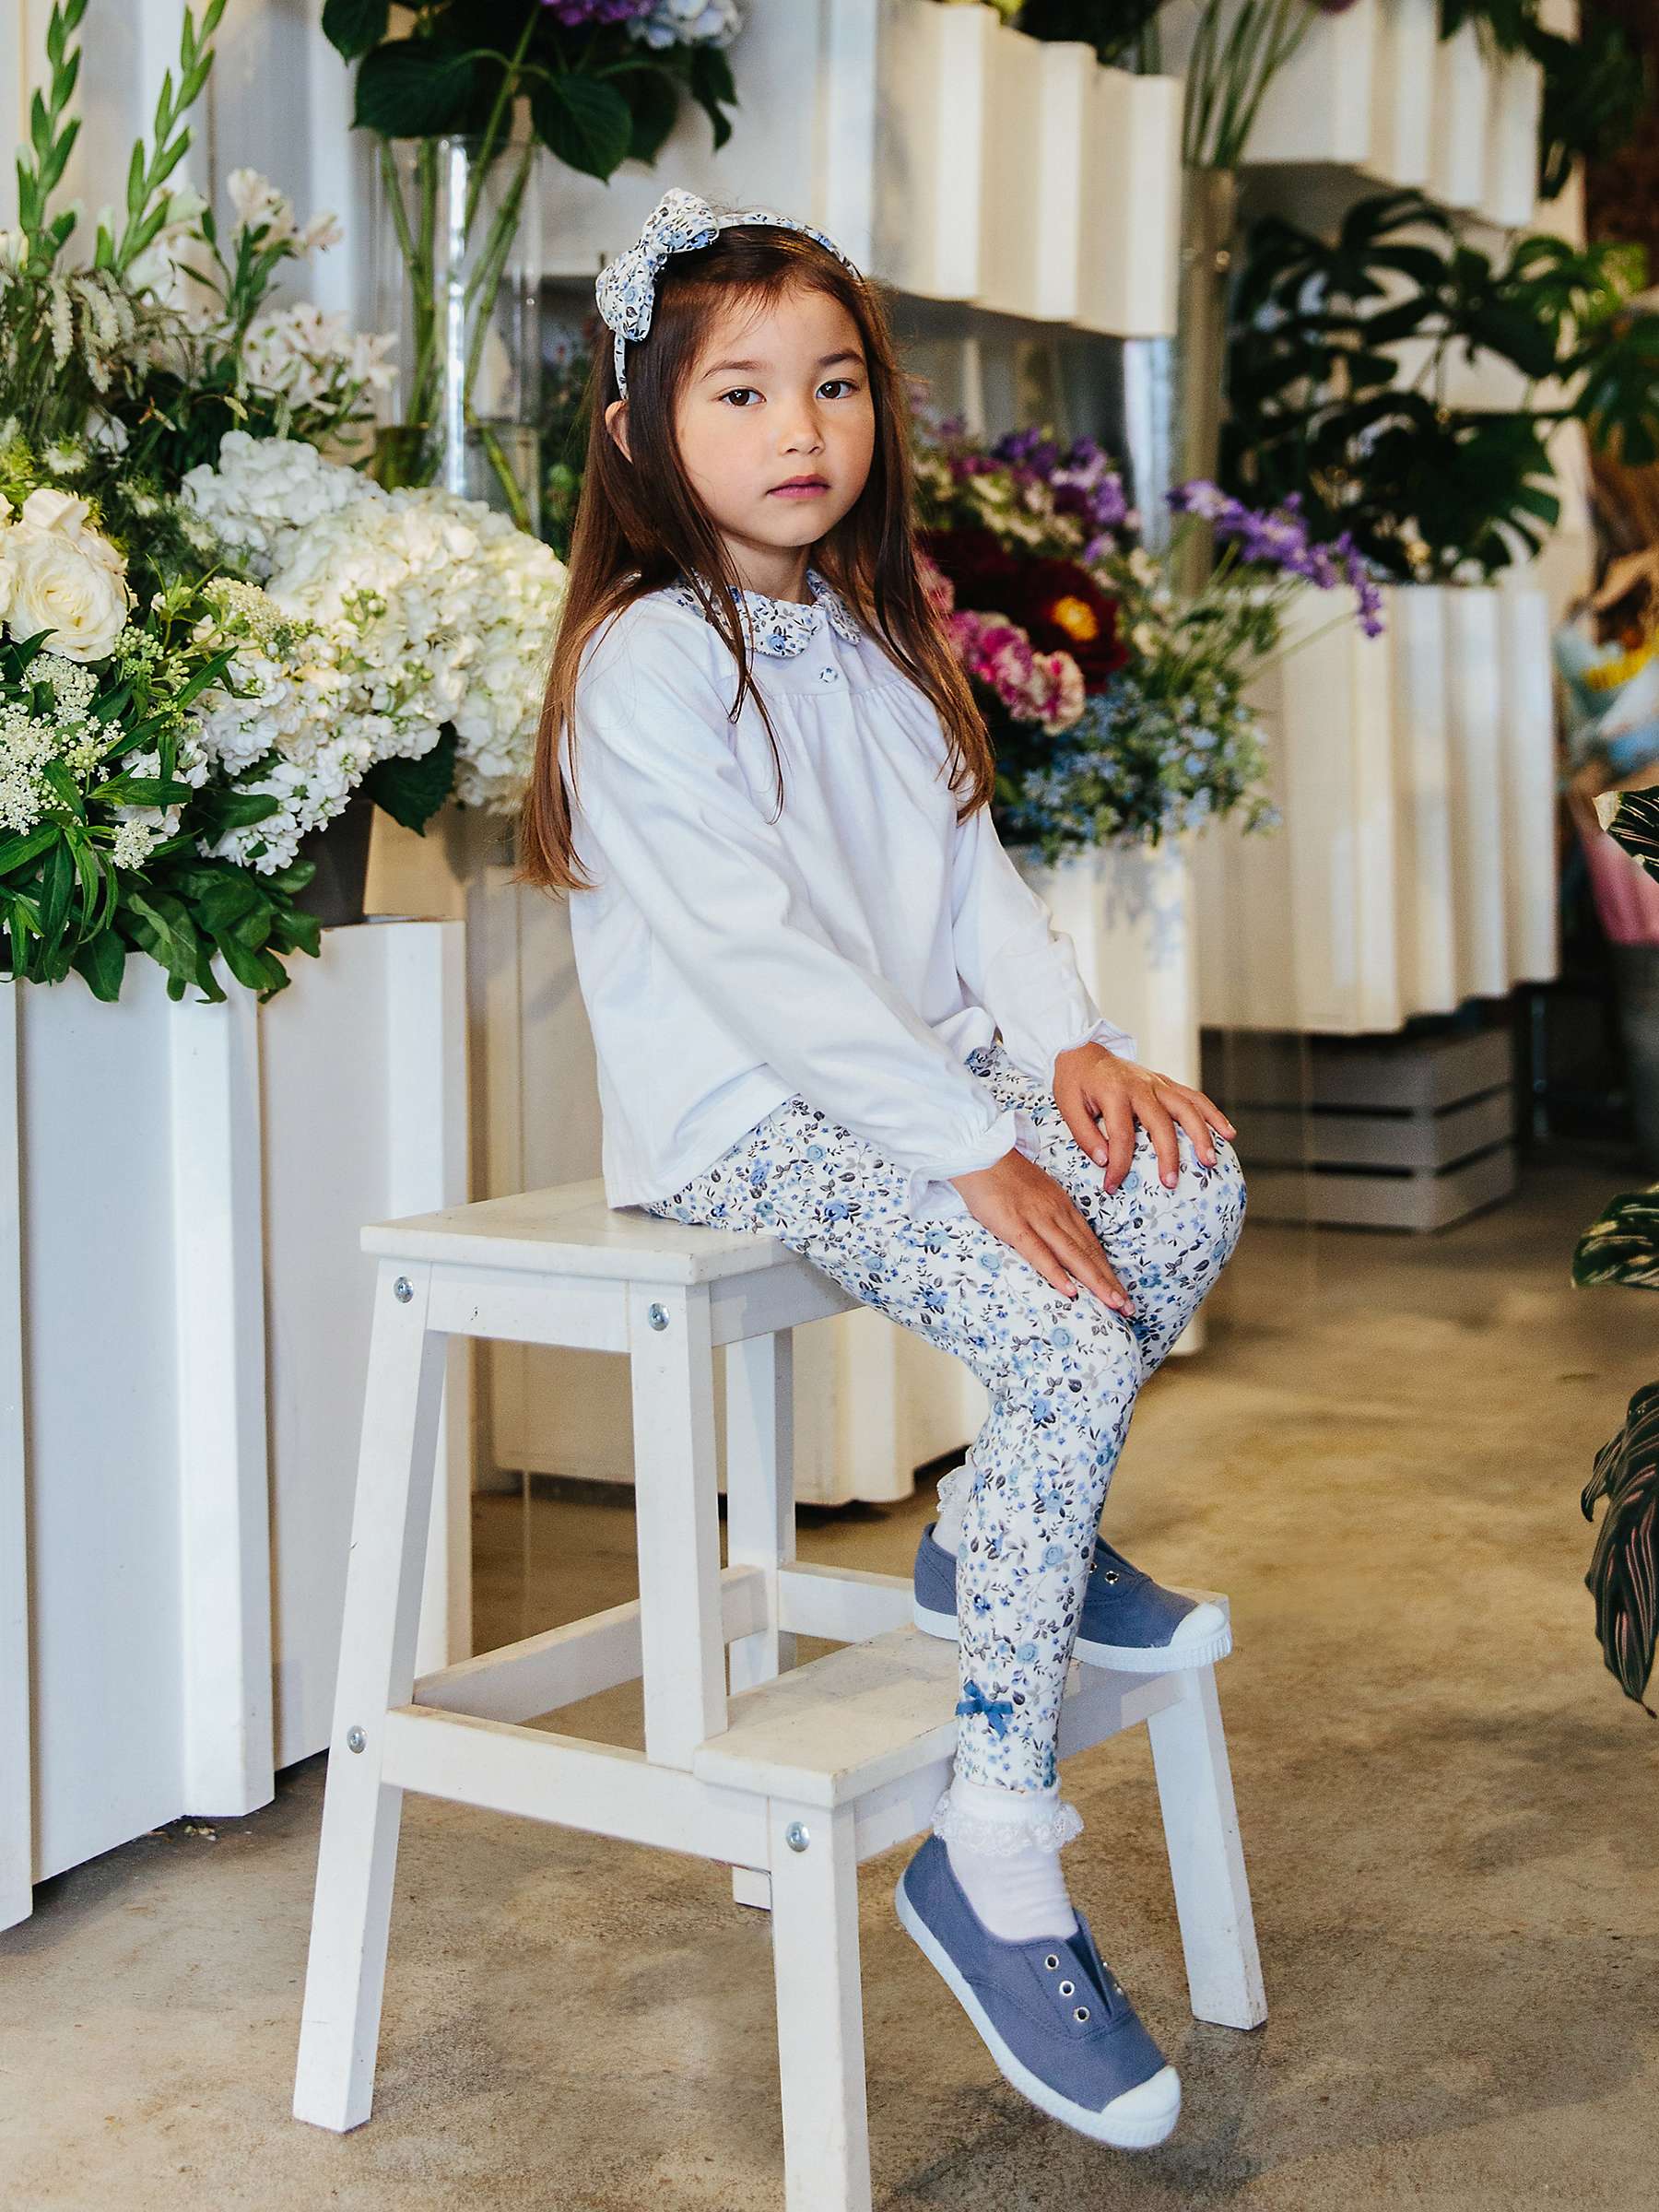 Buy Trotters Confiture Kids' Arabella Floral Collar Jersey Blouse, White/Blue Online at johnlewis.com